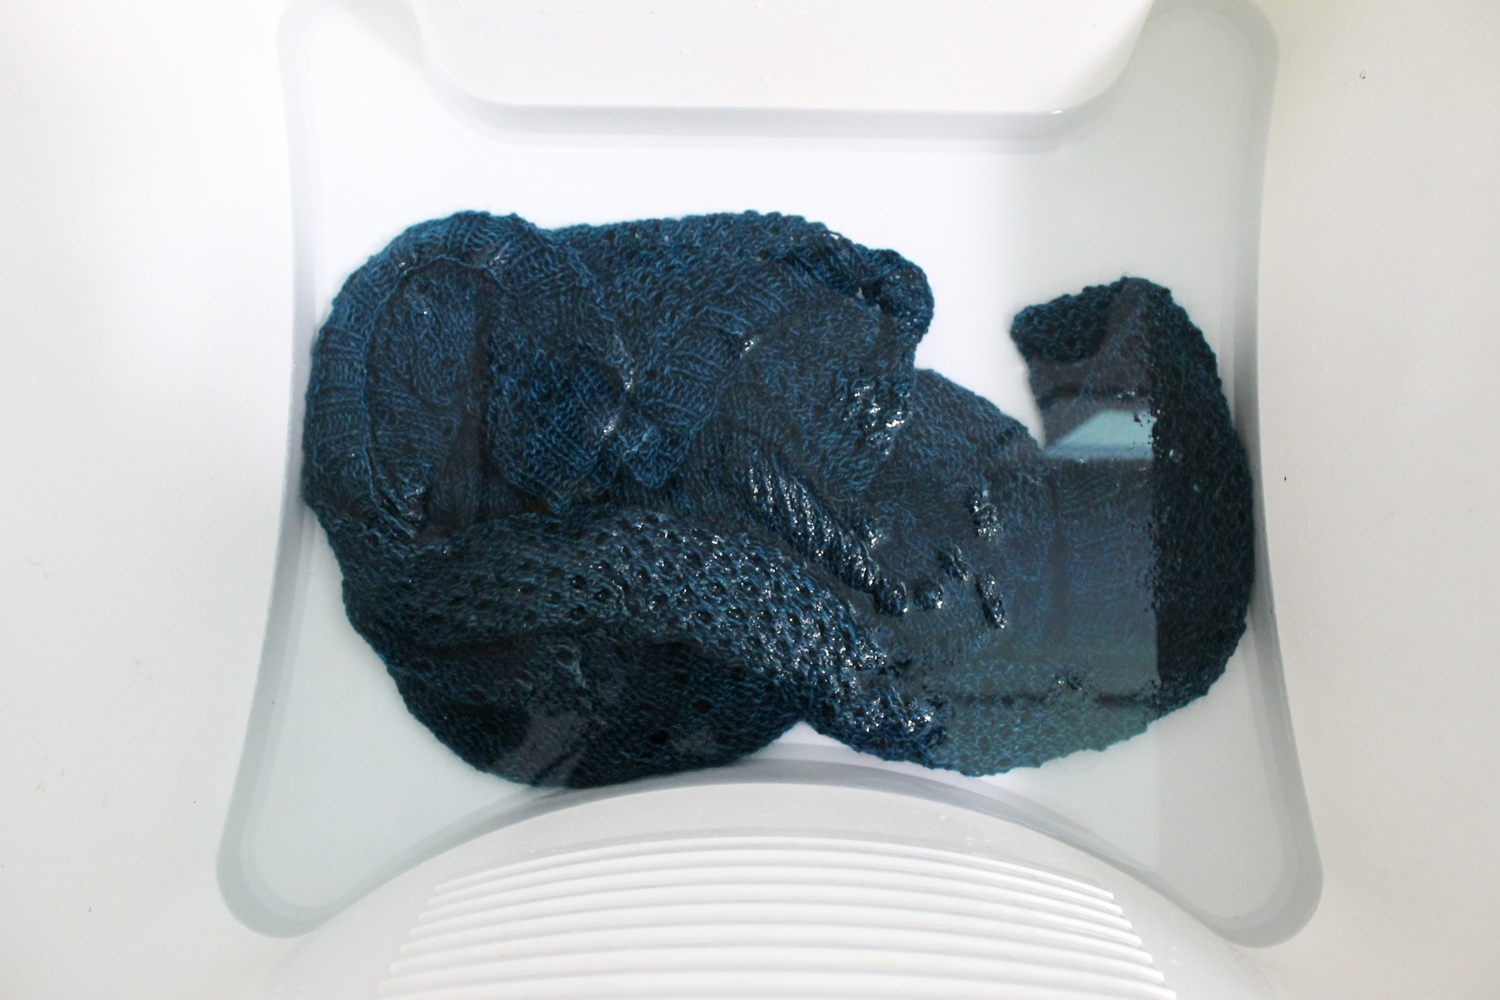 Washing a knit shawl